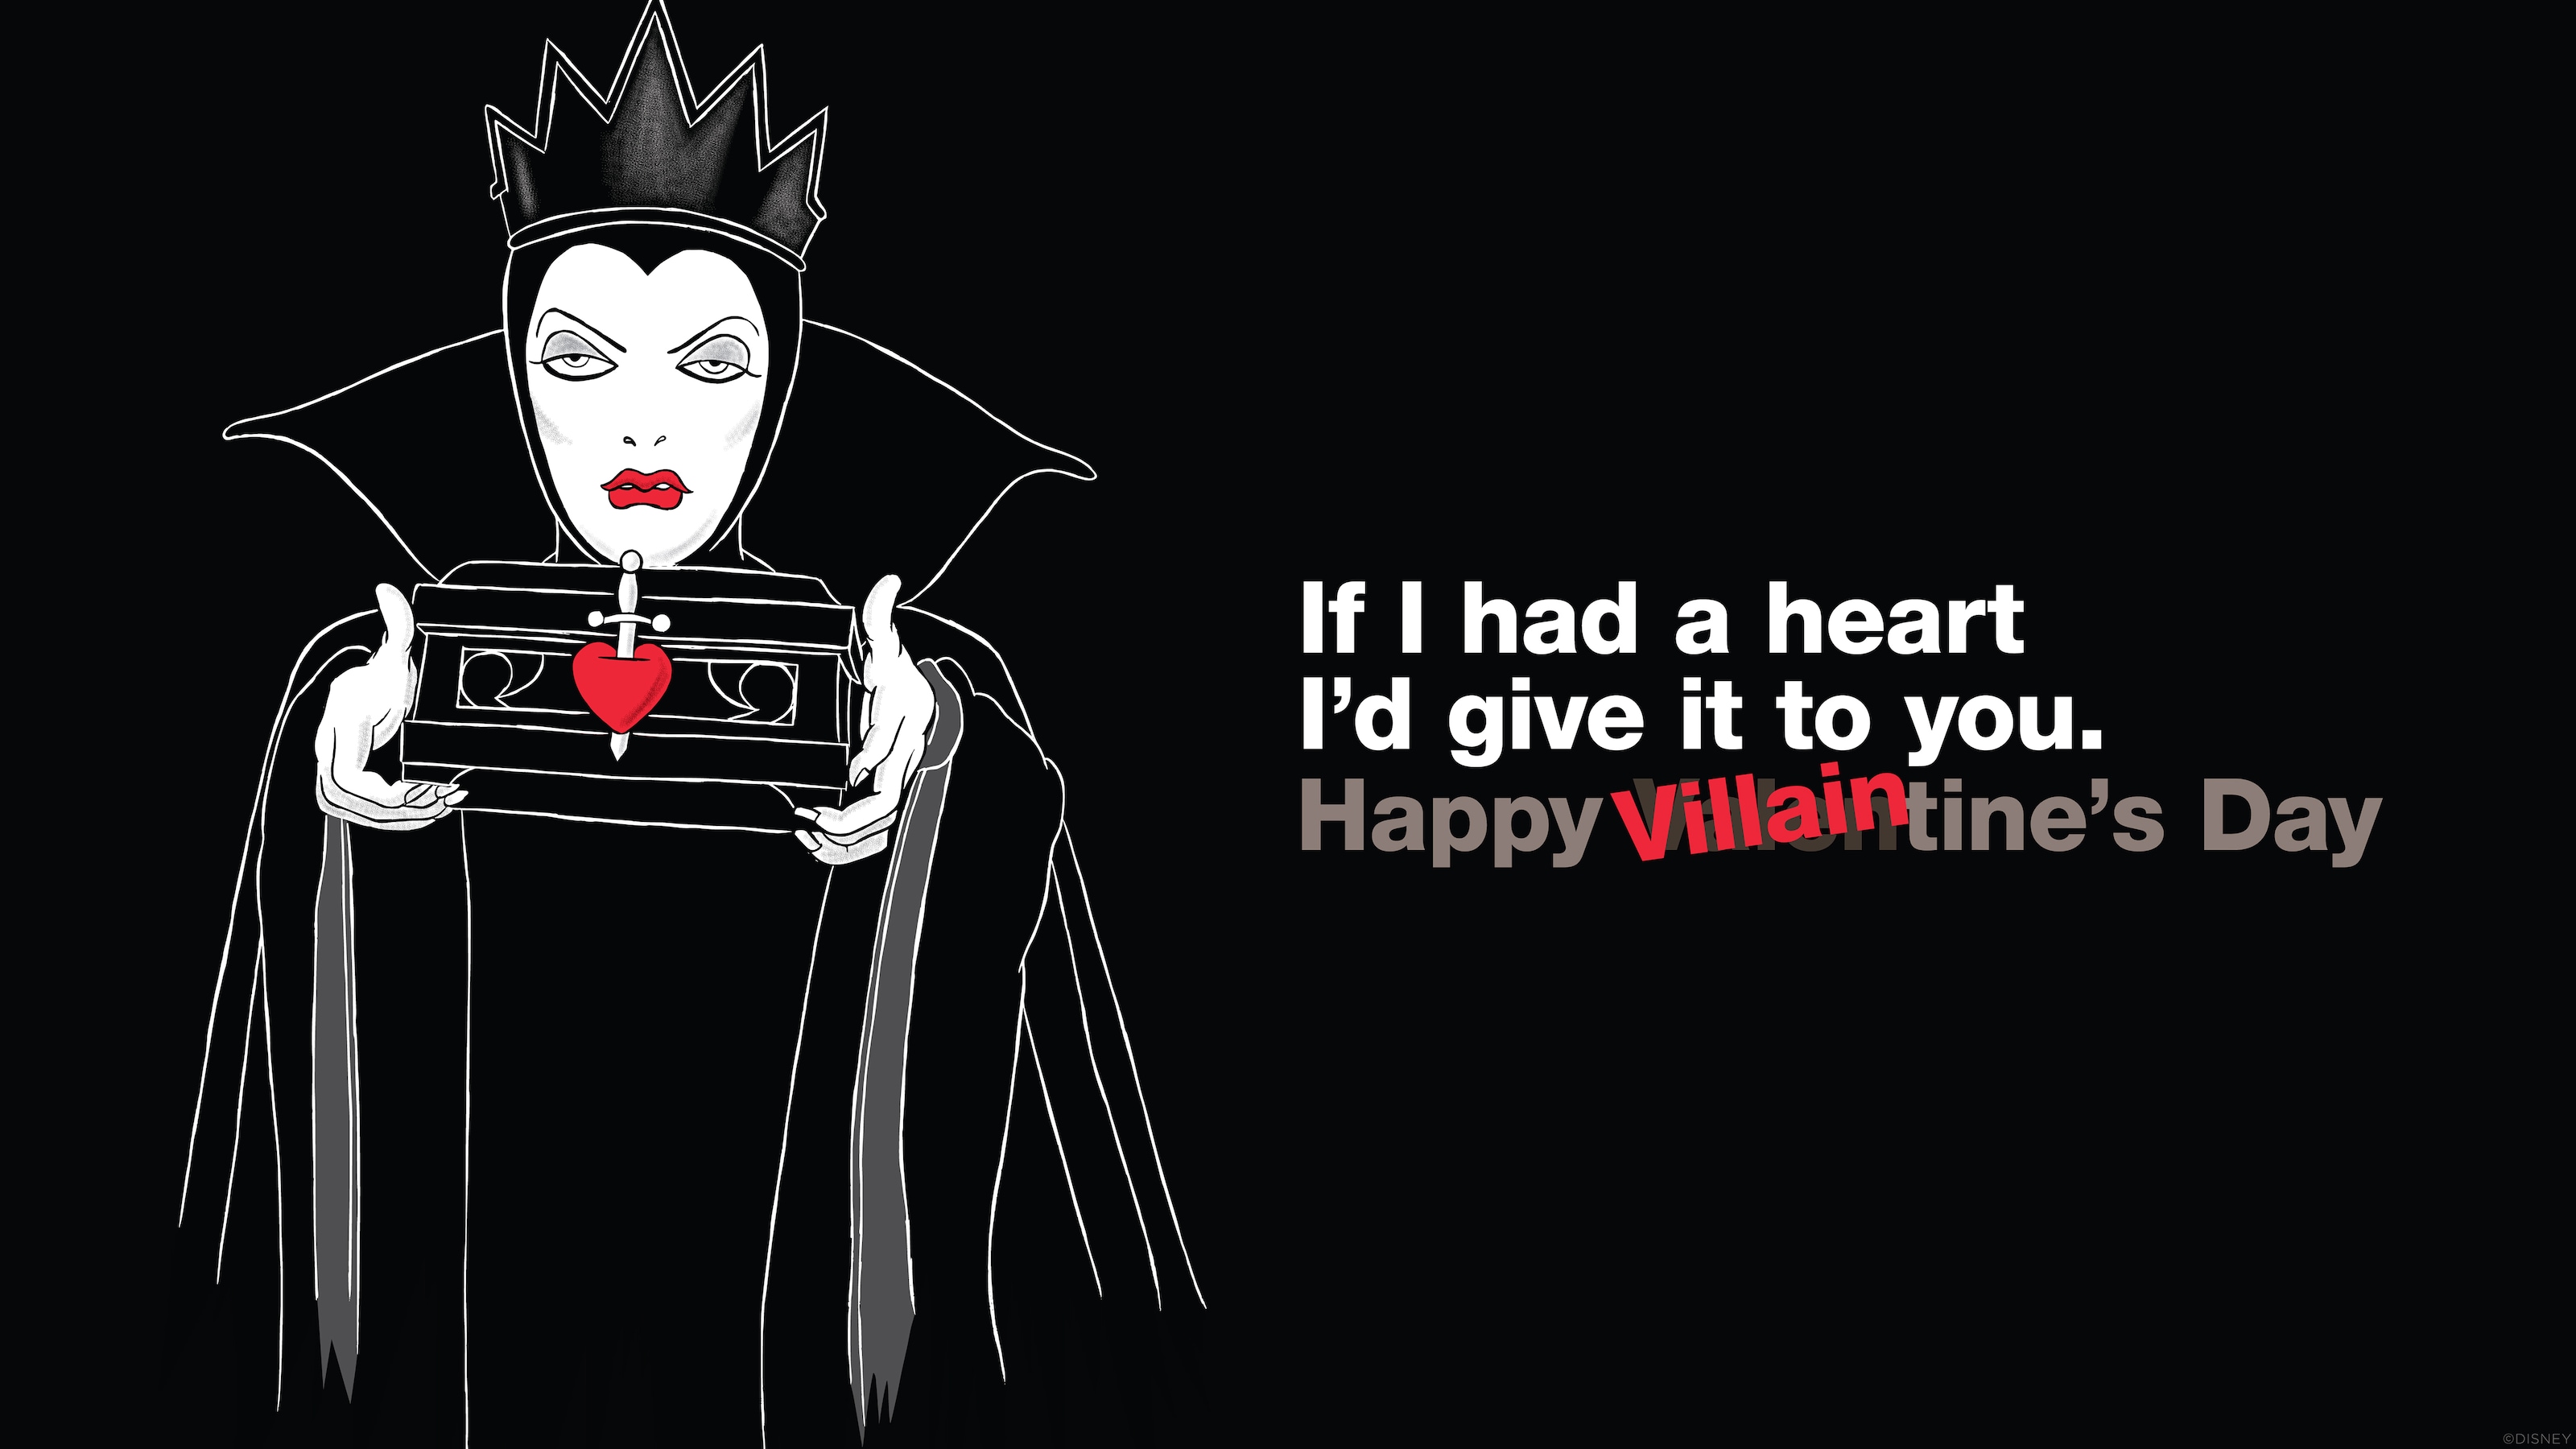 Happy Villaintines Day from Evil Queen – Desktop/iPad | Disney Parks Blog